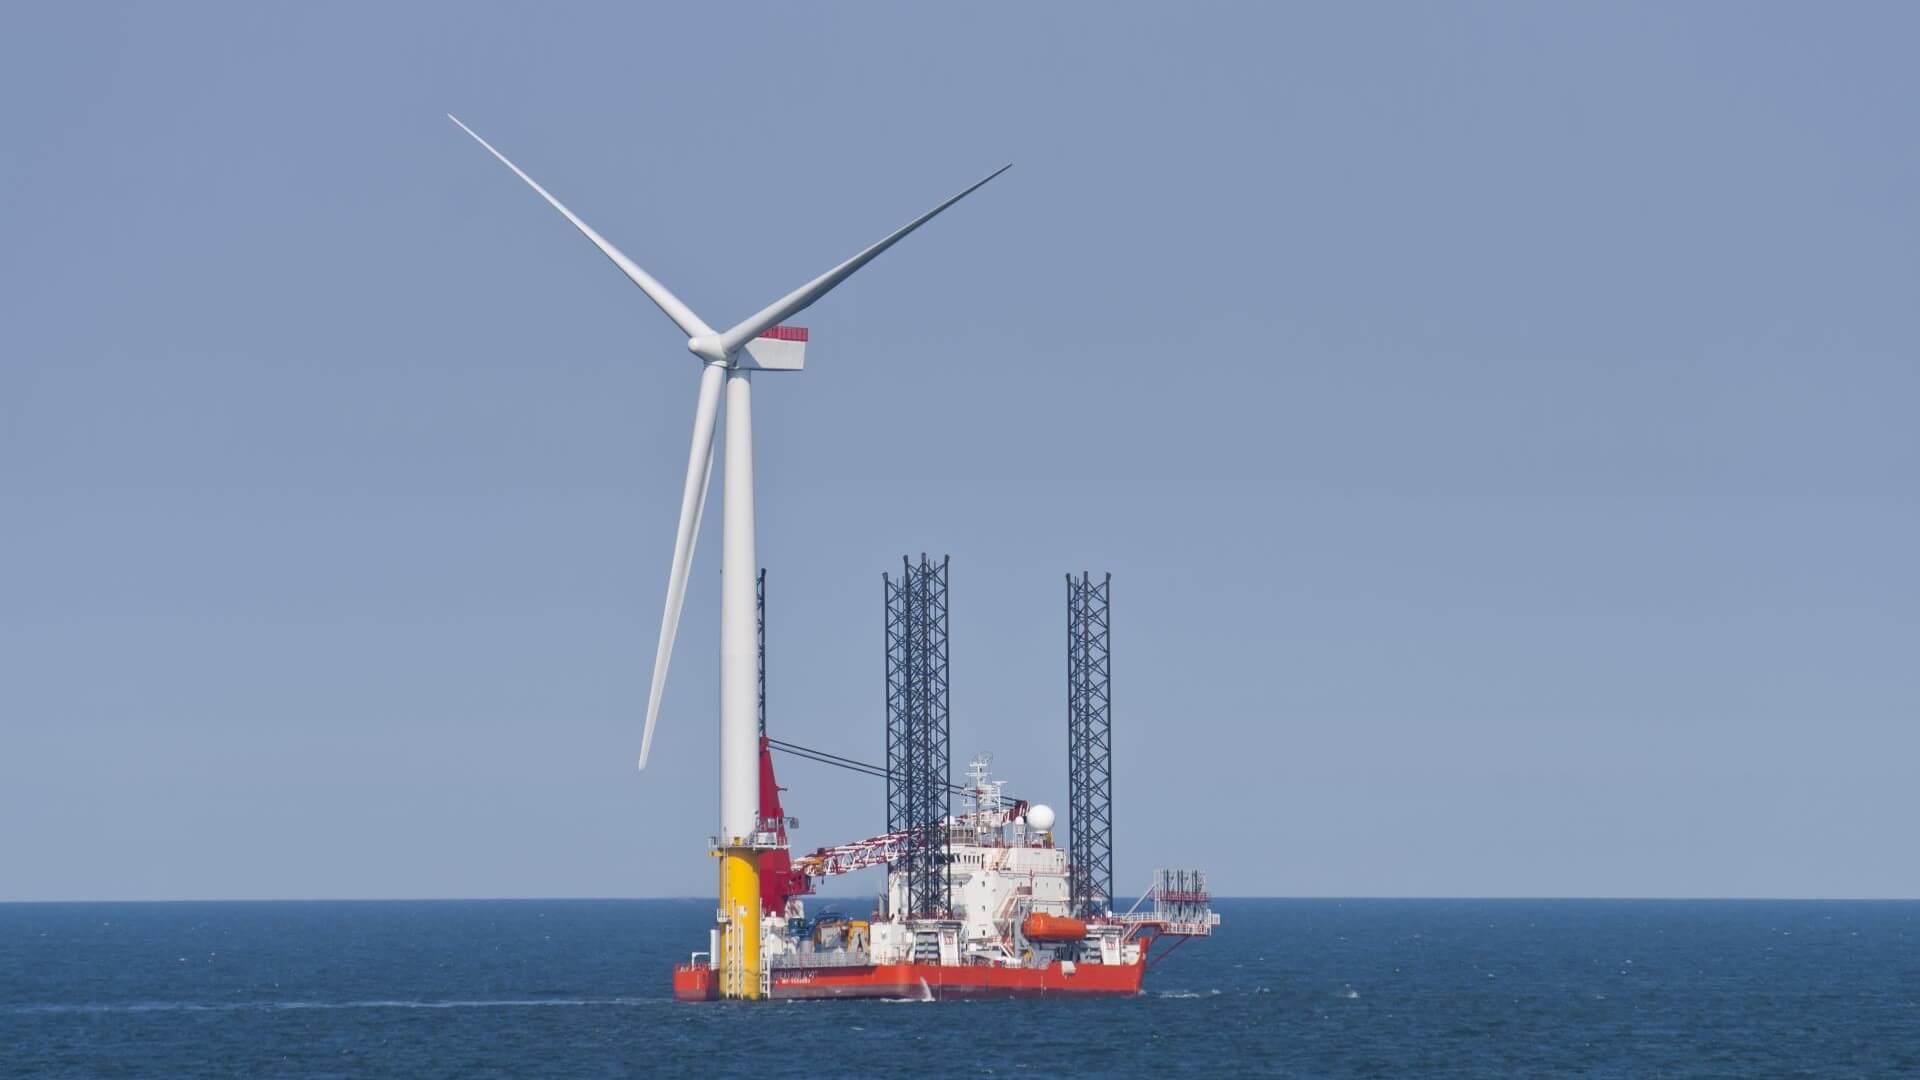 Wind turbine and construction vessel at sea